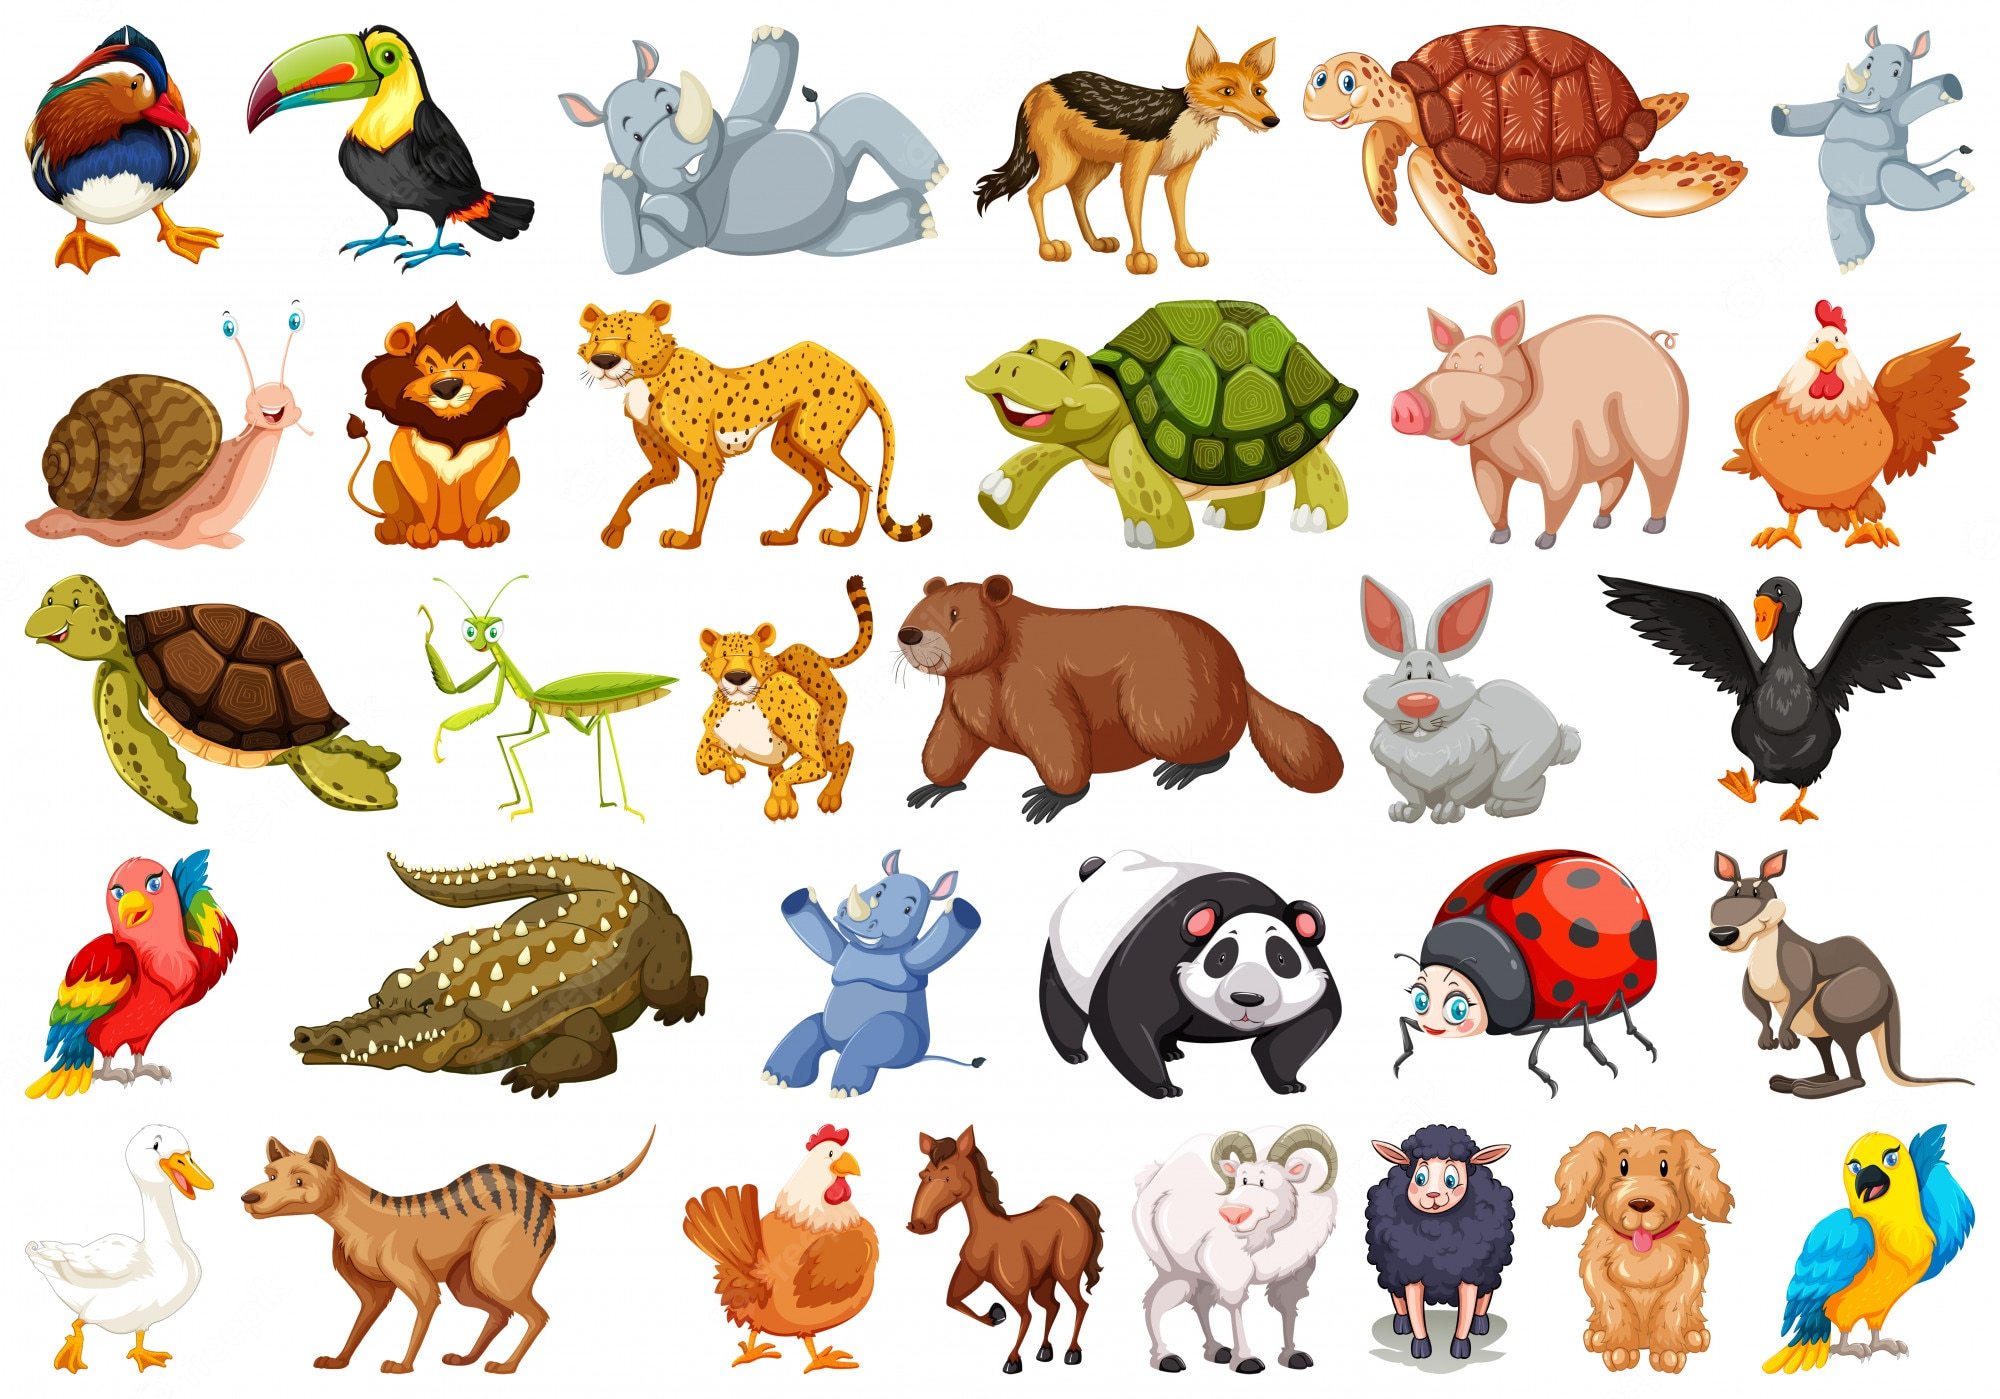 animal adaptations - Year 12 - Quizizz